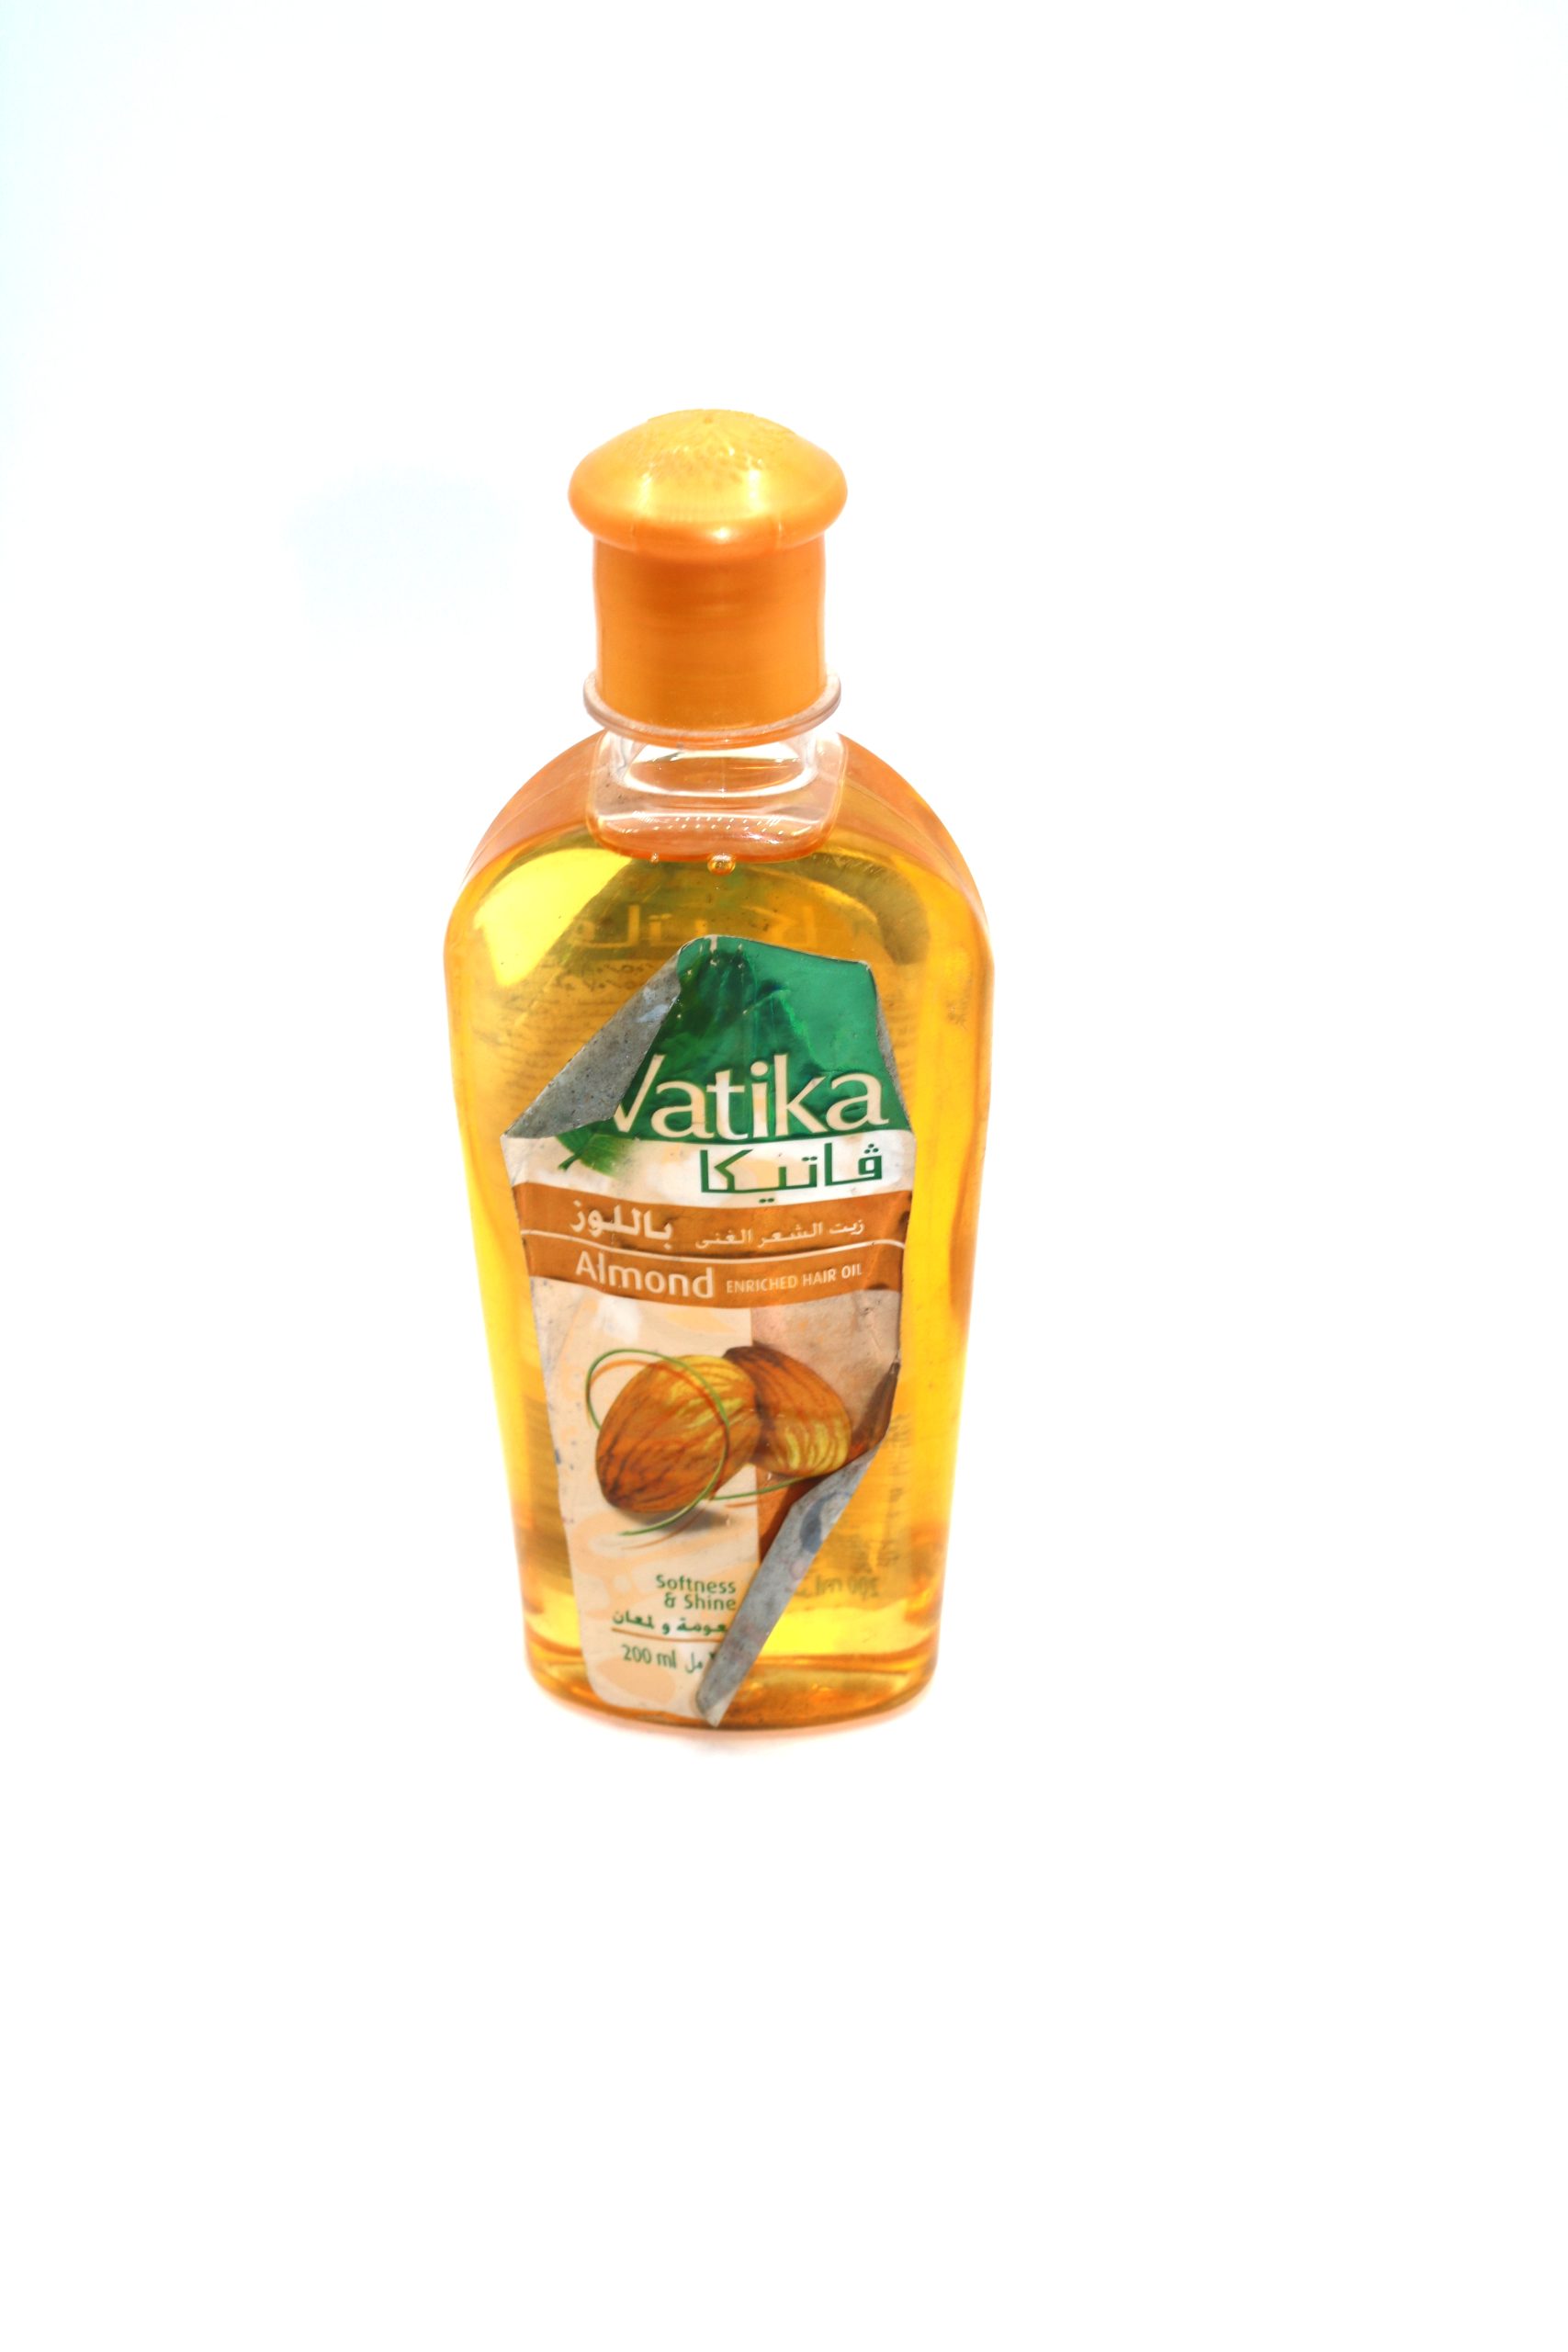 VATIKA Hair Oil 200 ml  Almond (Imported)